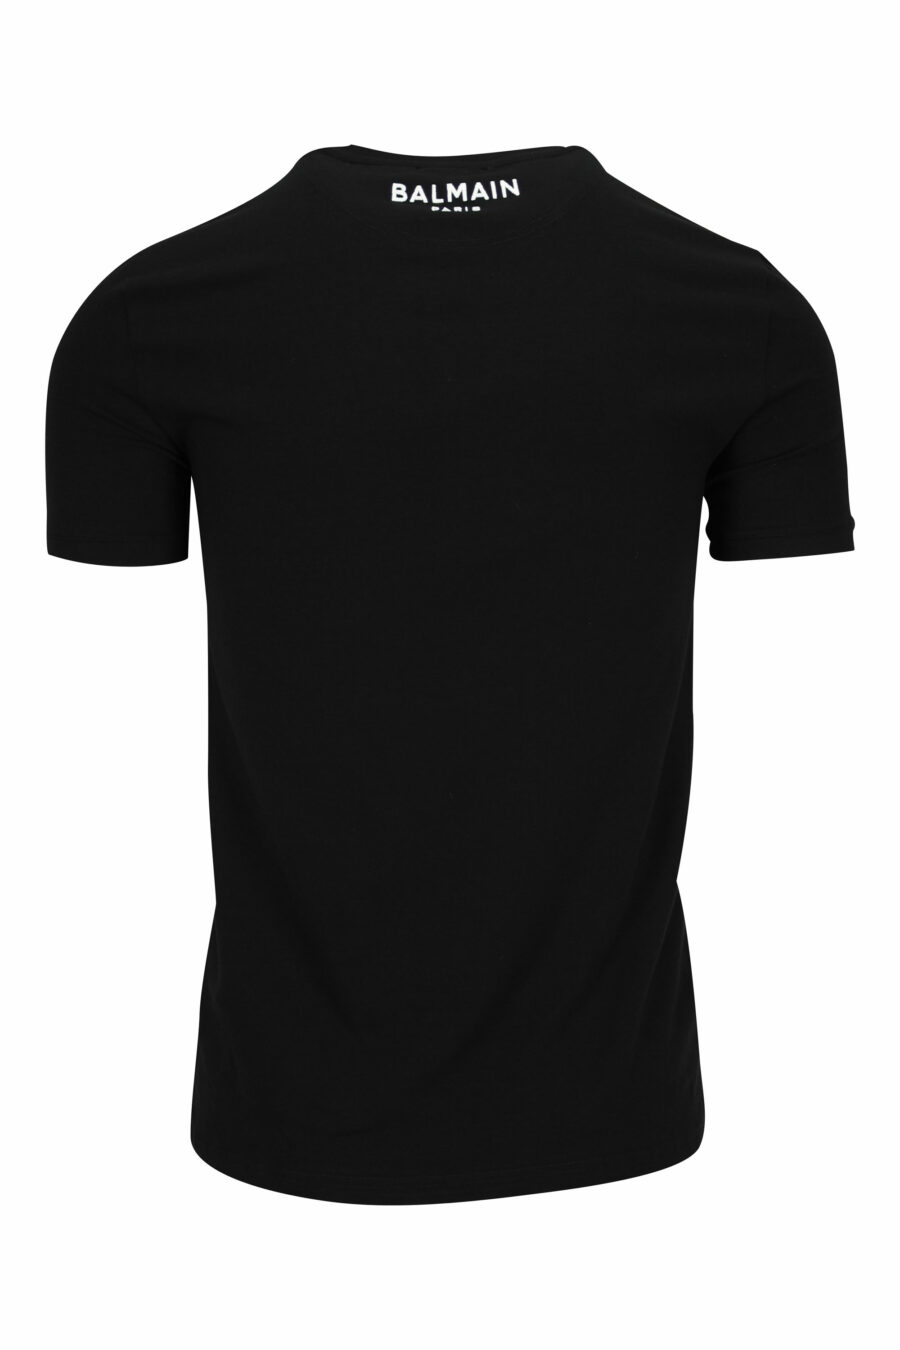 Camiseta negra con minilogo en cuello - 8032674524621 1